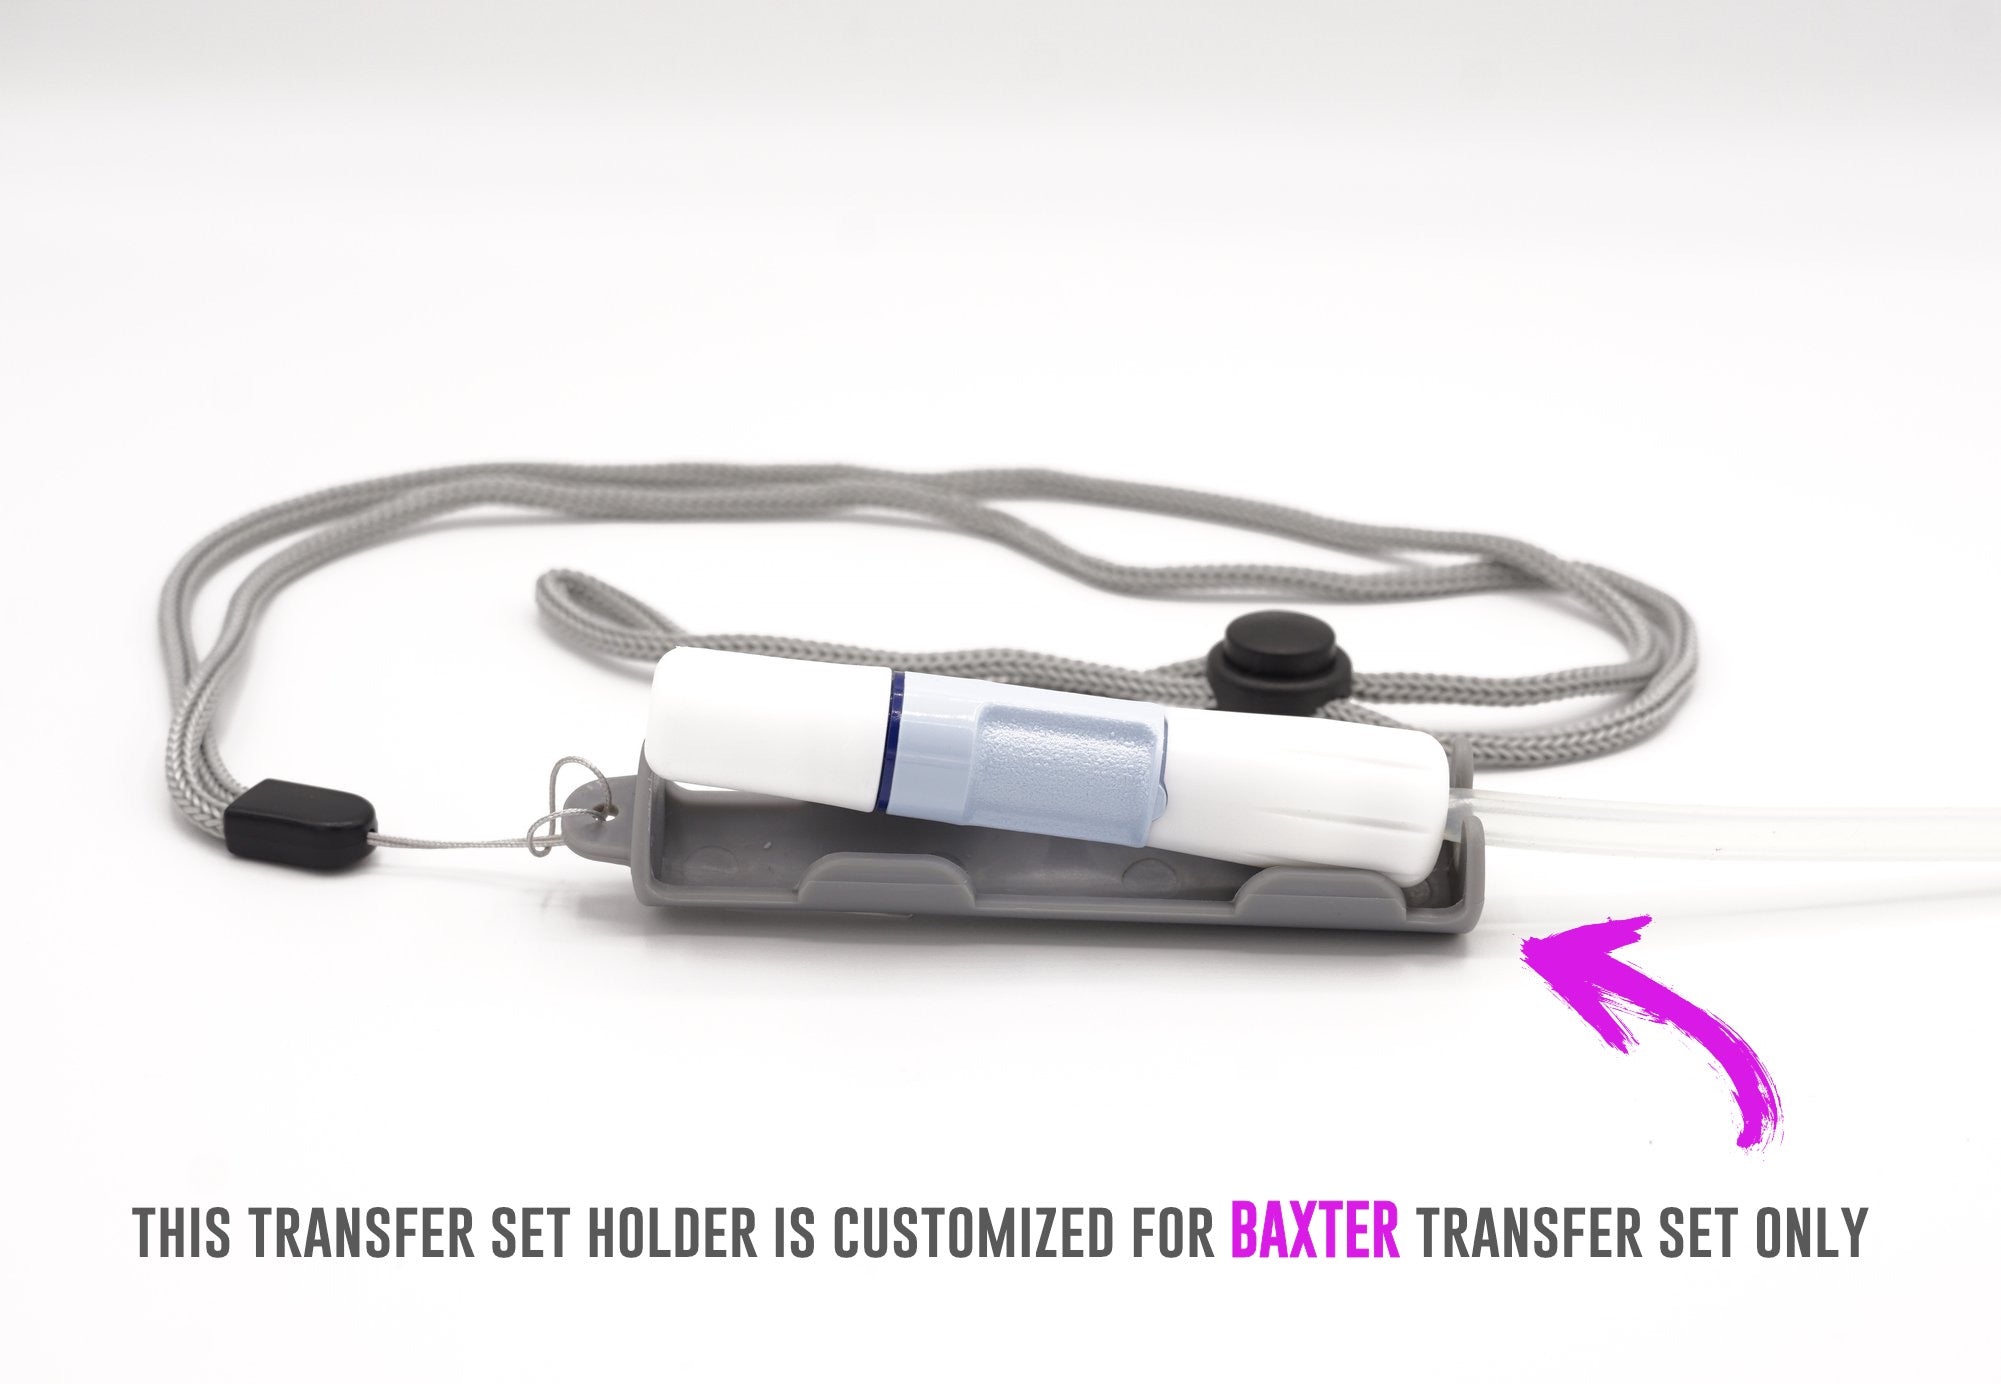 Original Peritoneal Dialysis Transfer Set Holder for Baxter